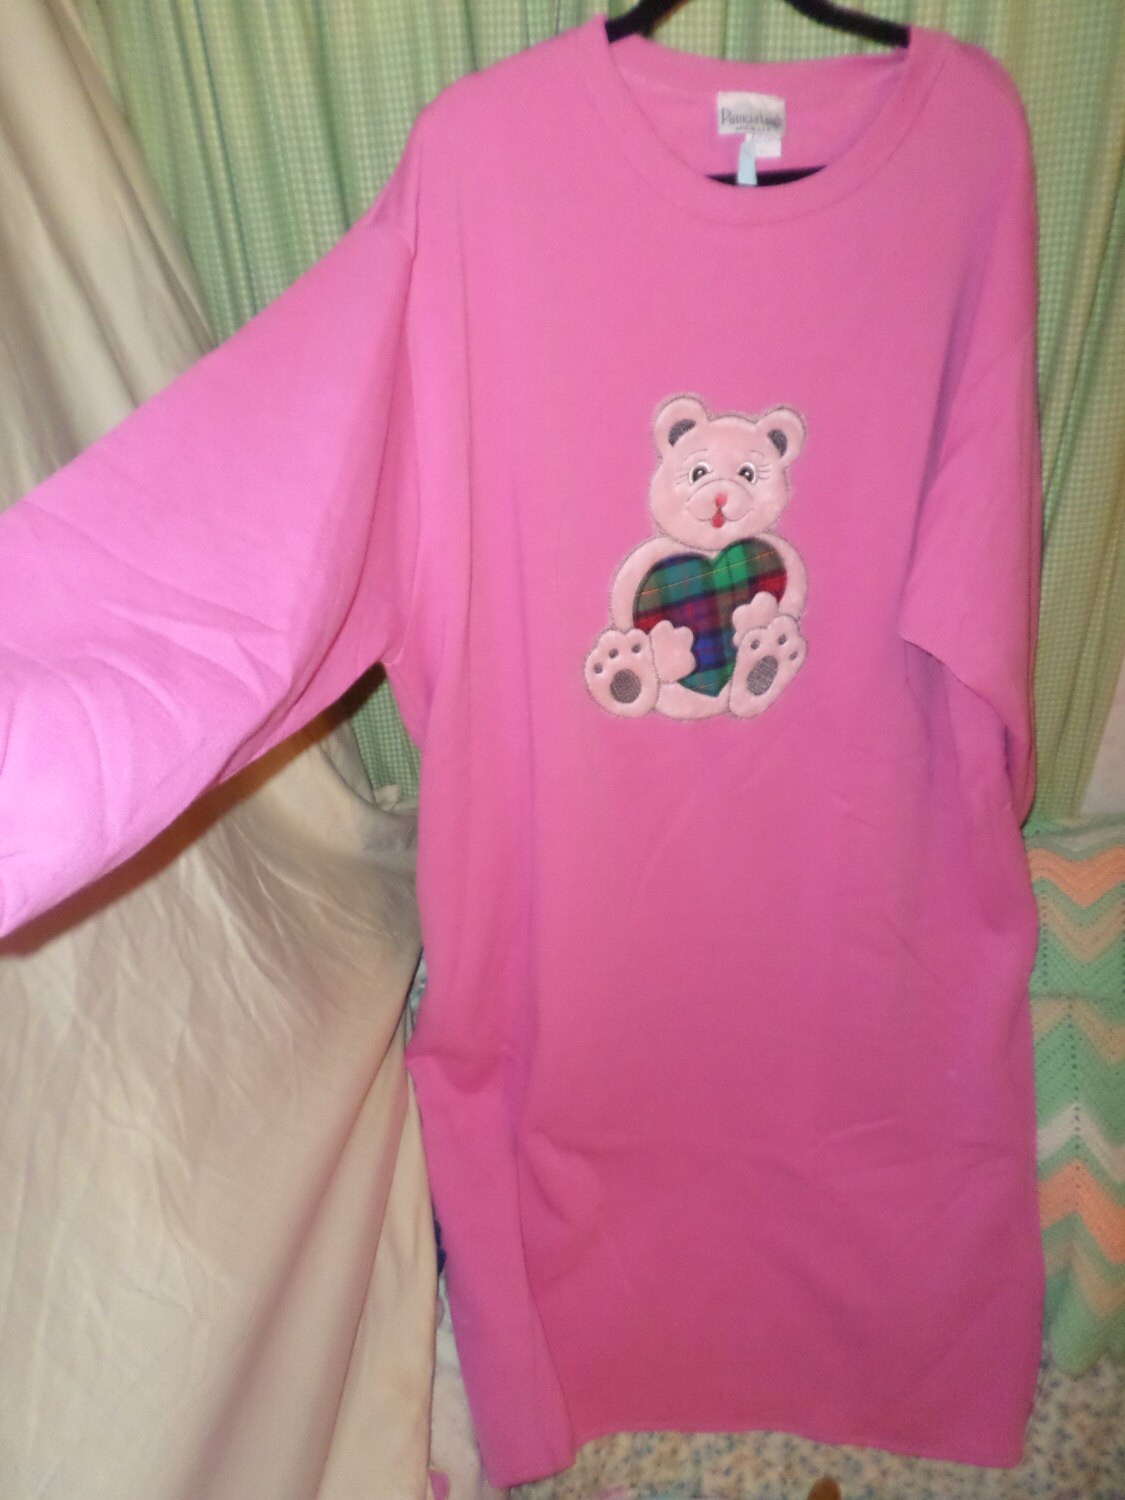 🌷 Pink Plaid Pajama Pants Set 🌷 !!MESSAGE BEFORE - Depop